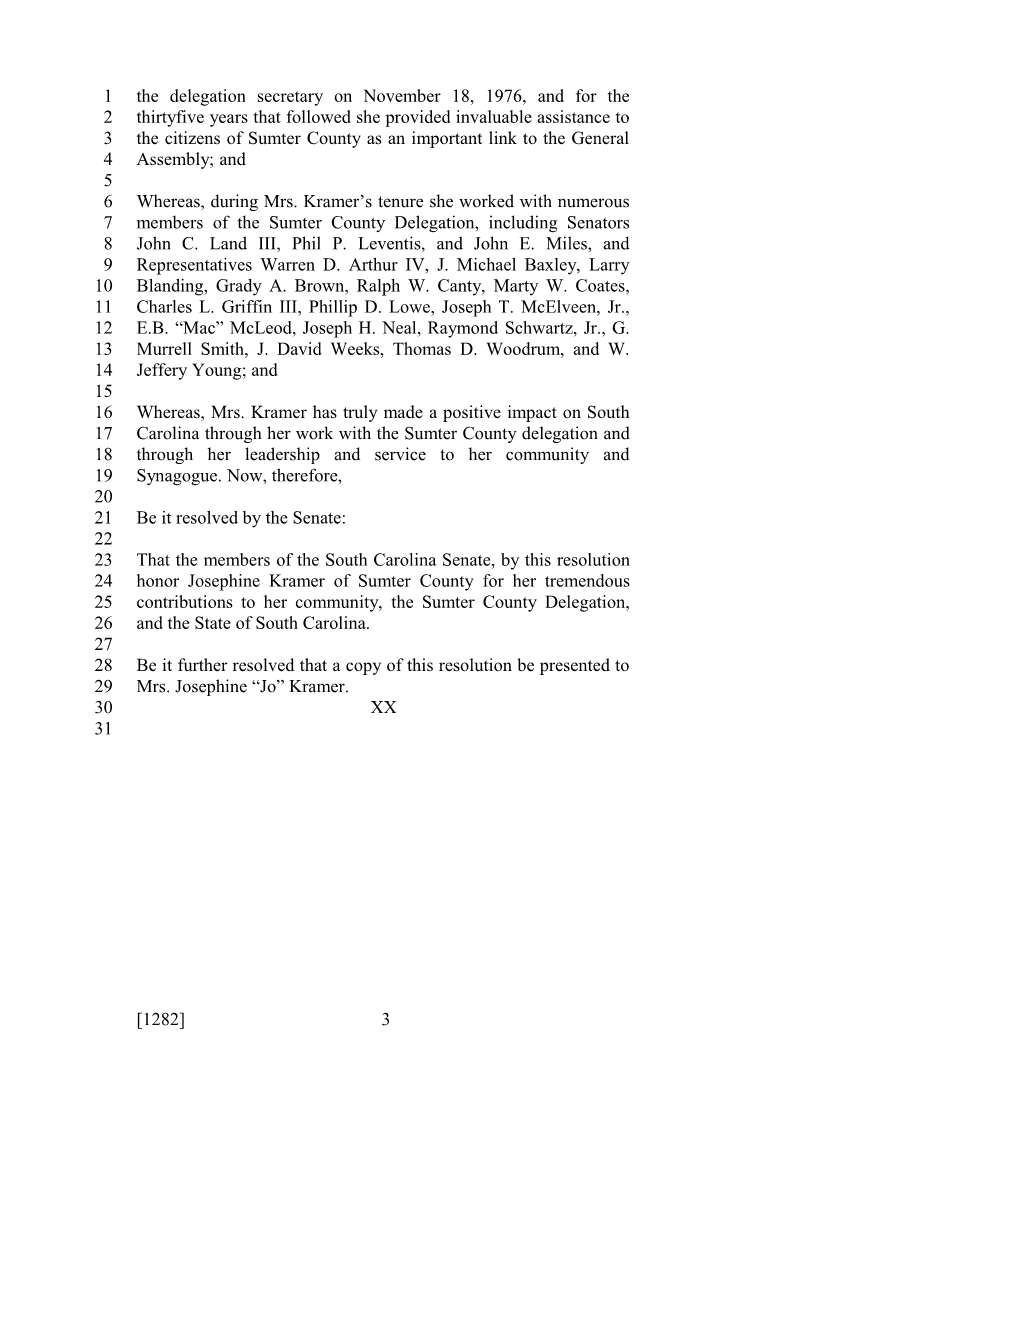 2011-2012 Bill 1282: Josephine Kramer - South Carolina Legislature Online